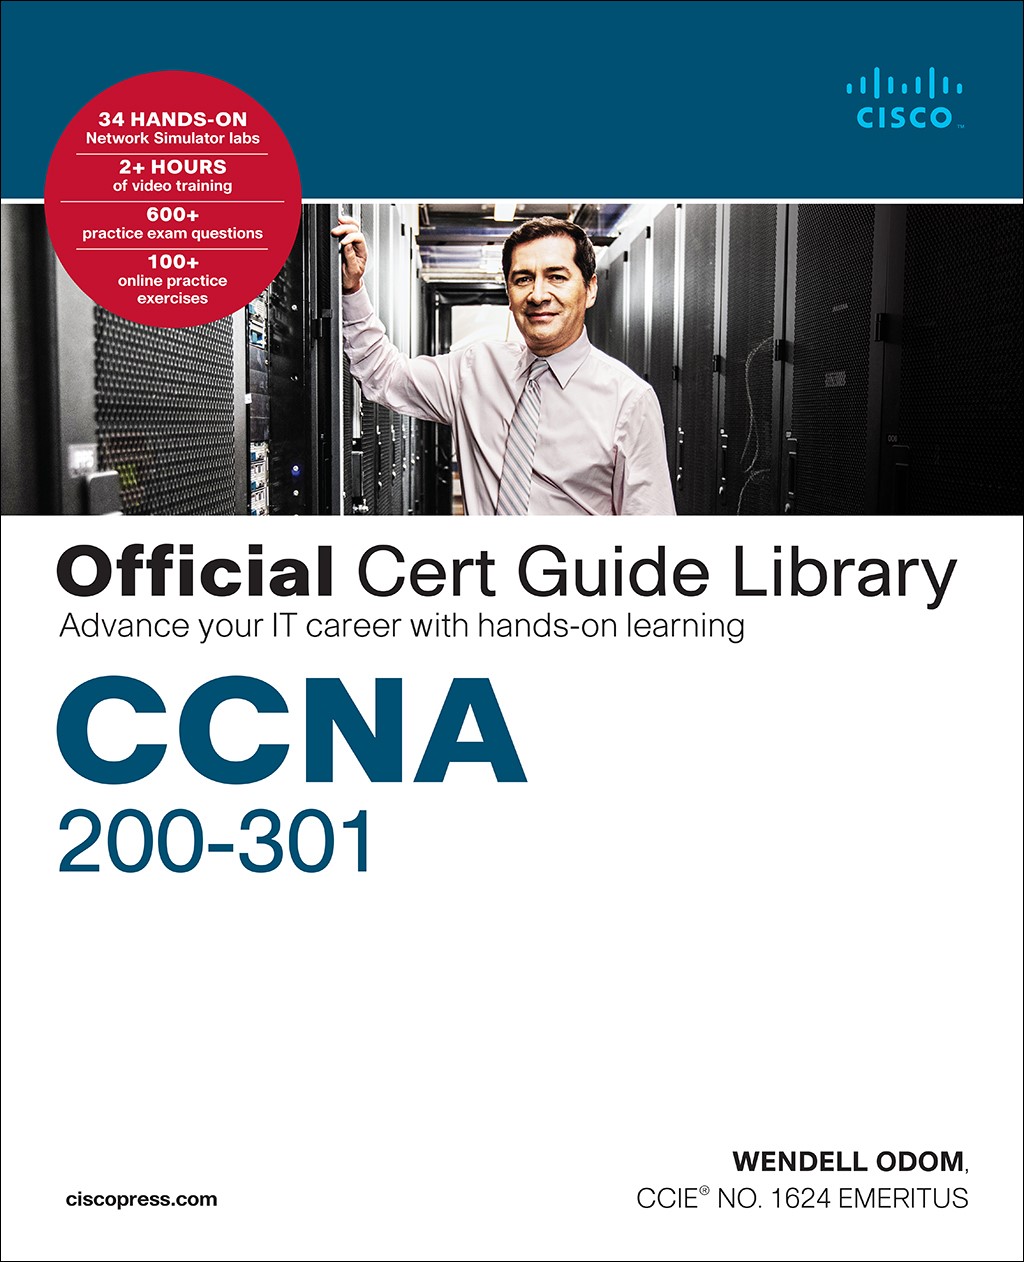 cisco ccna 200 301 book – ccna books free download pdf – Filmisfine